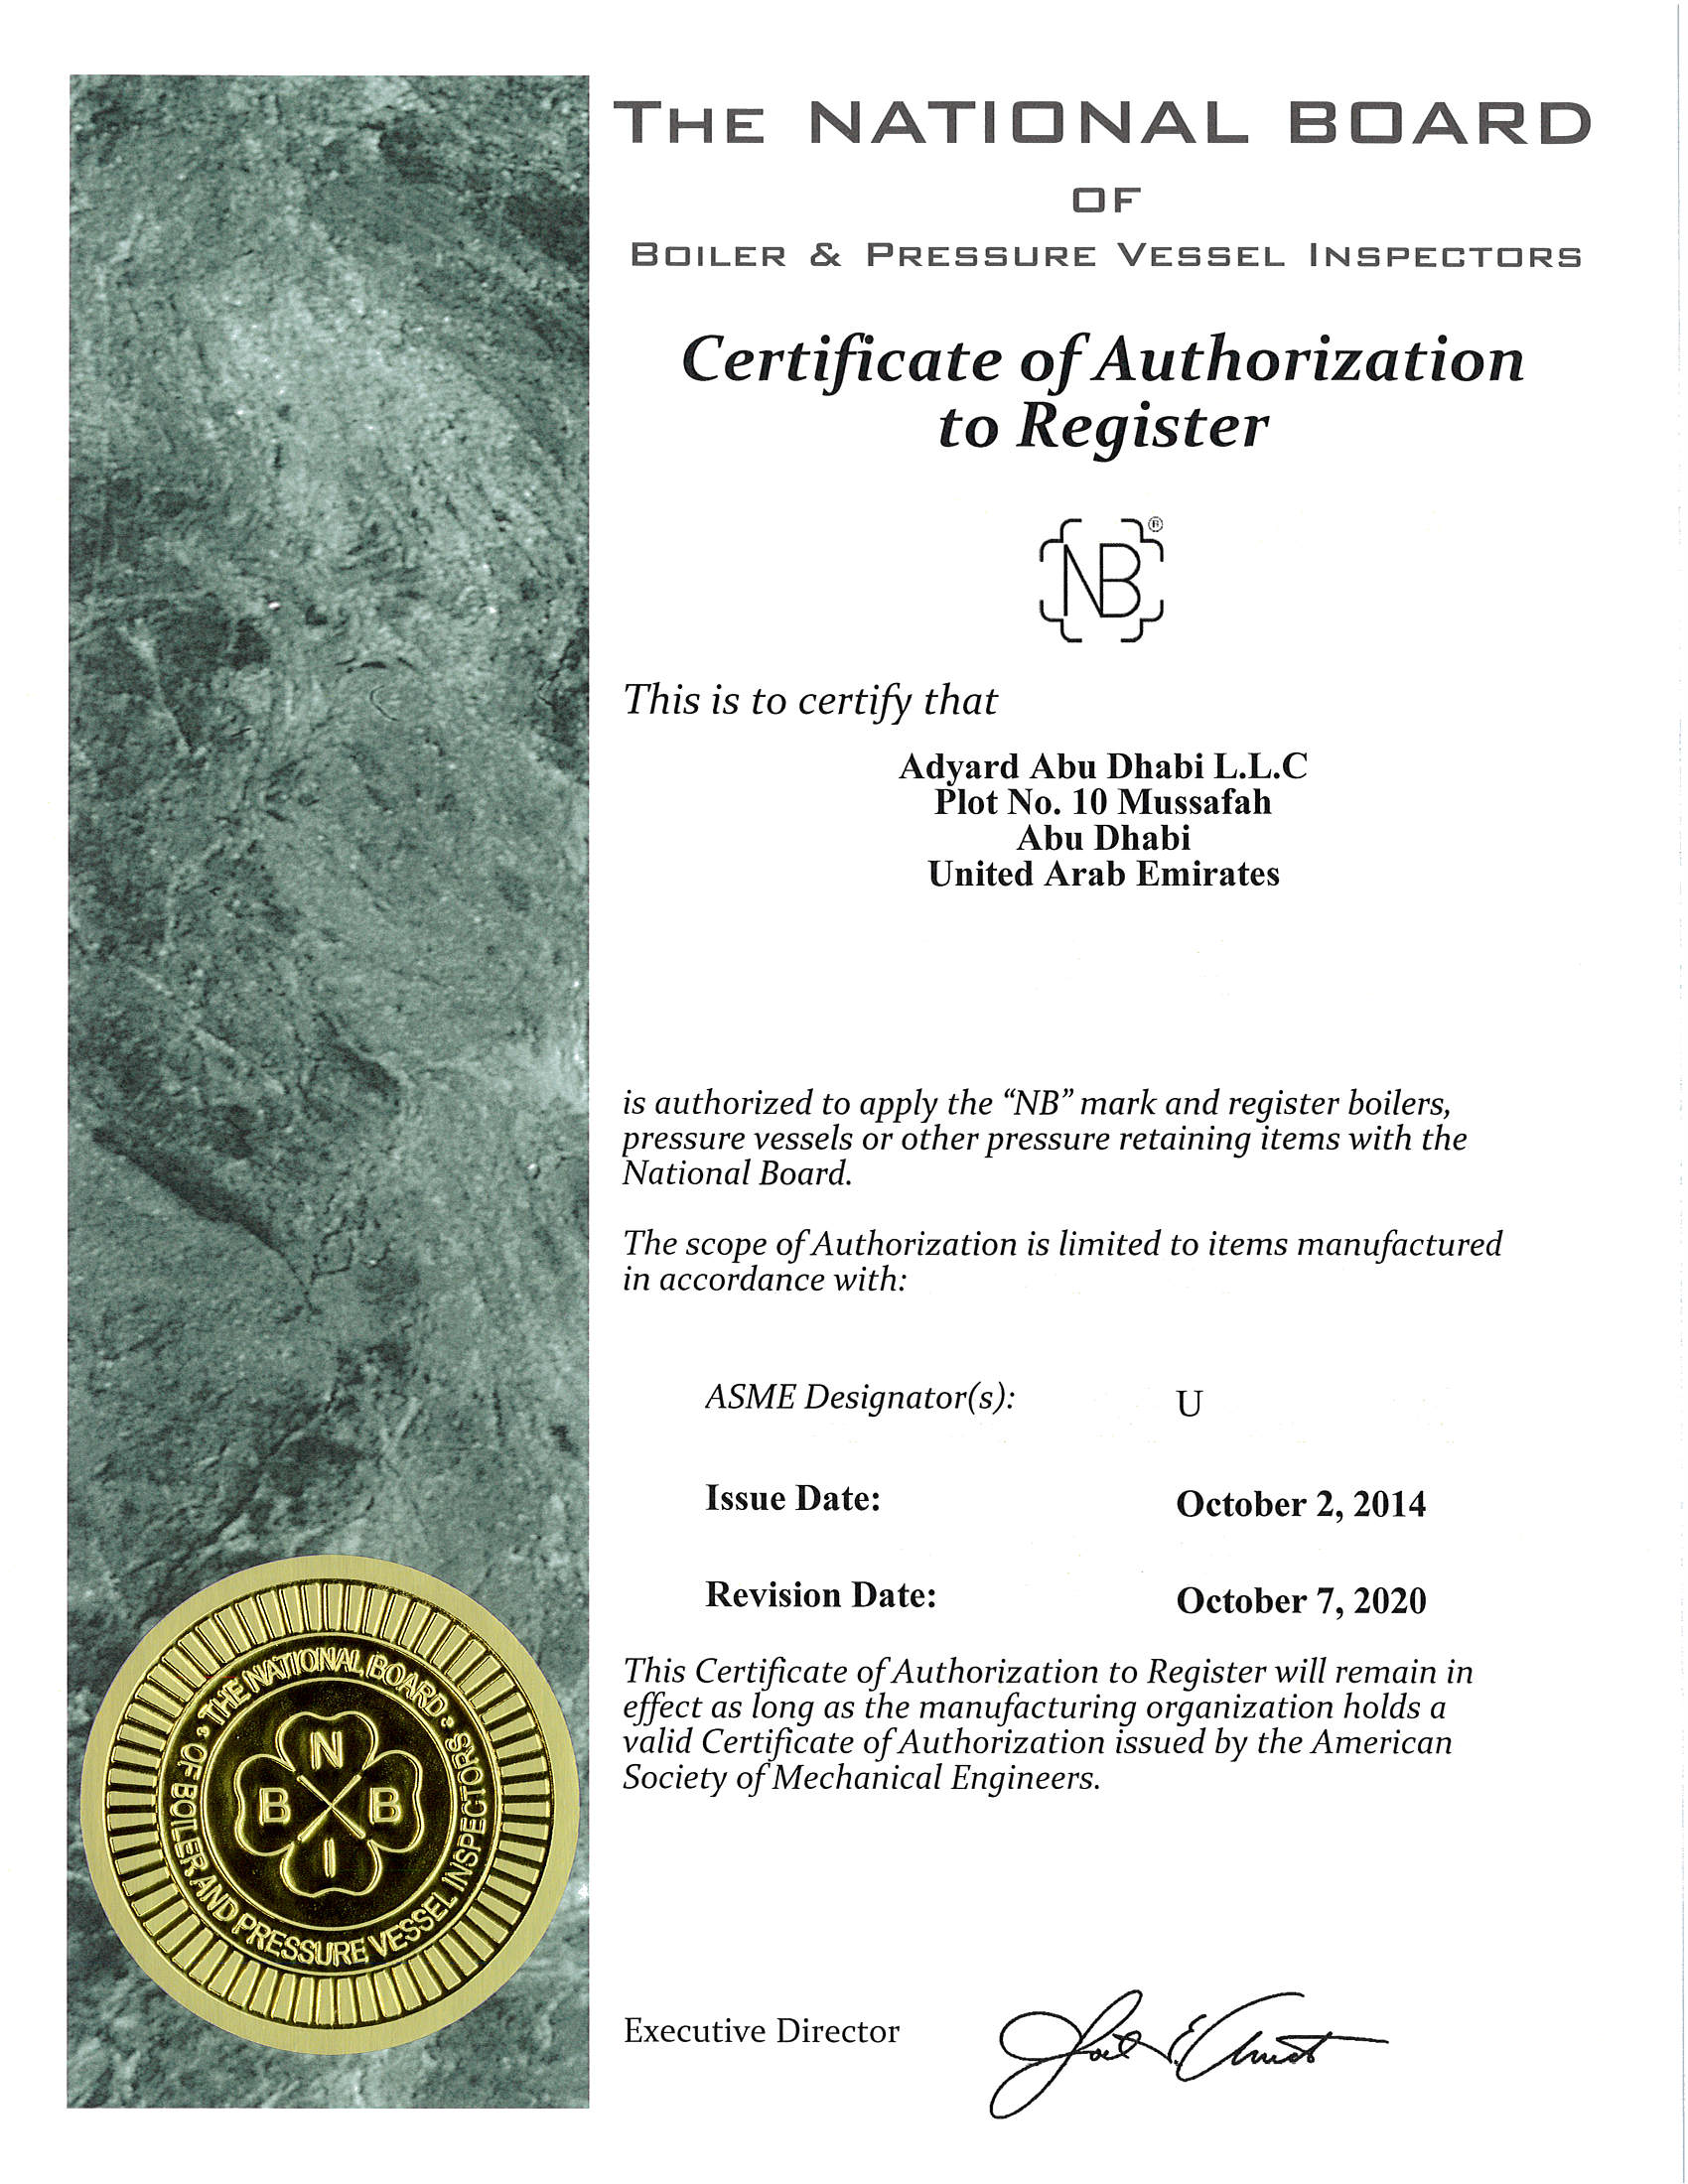 Adyard National Board Certificate of Authorization